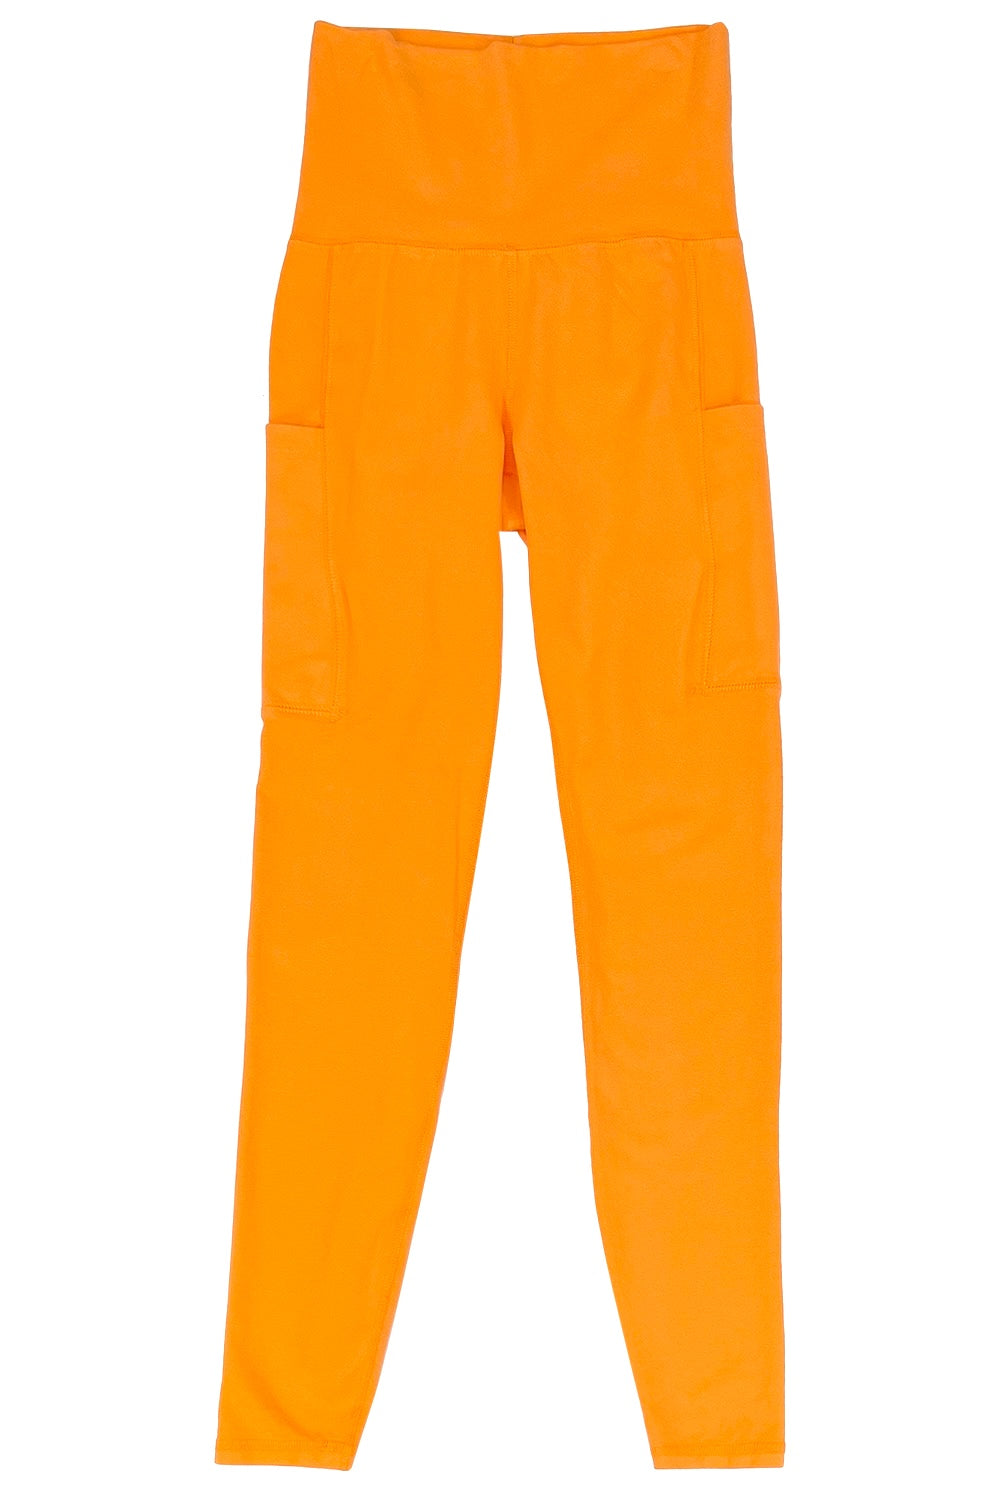 Orosi Pocket Leggings - Mid Rise | Jungmaven Hemp Clothing & Accessories / Color: Apricot Crush